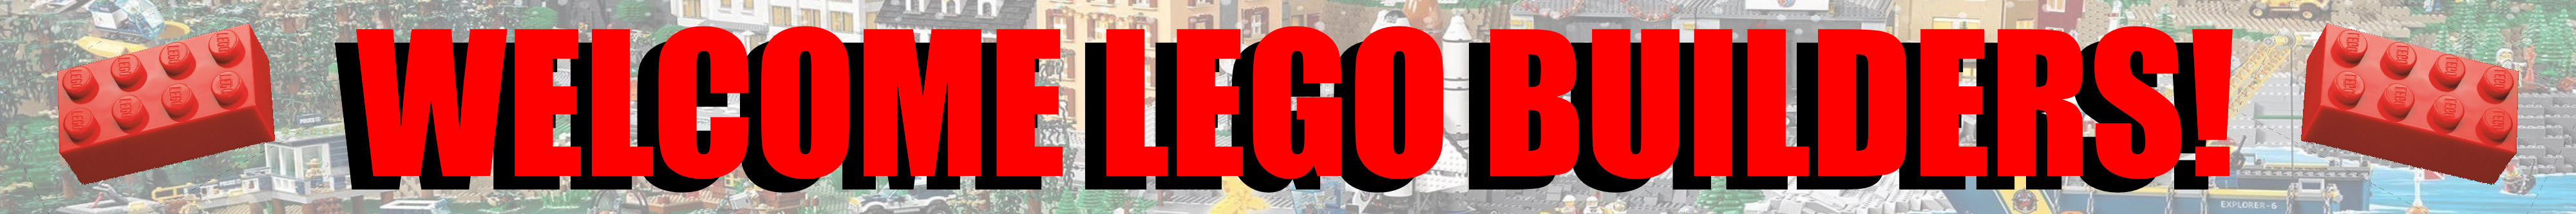 Welcome LEGO Builders!